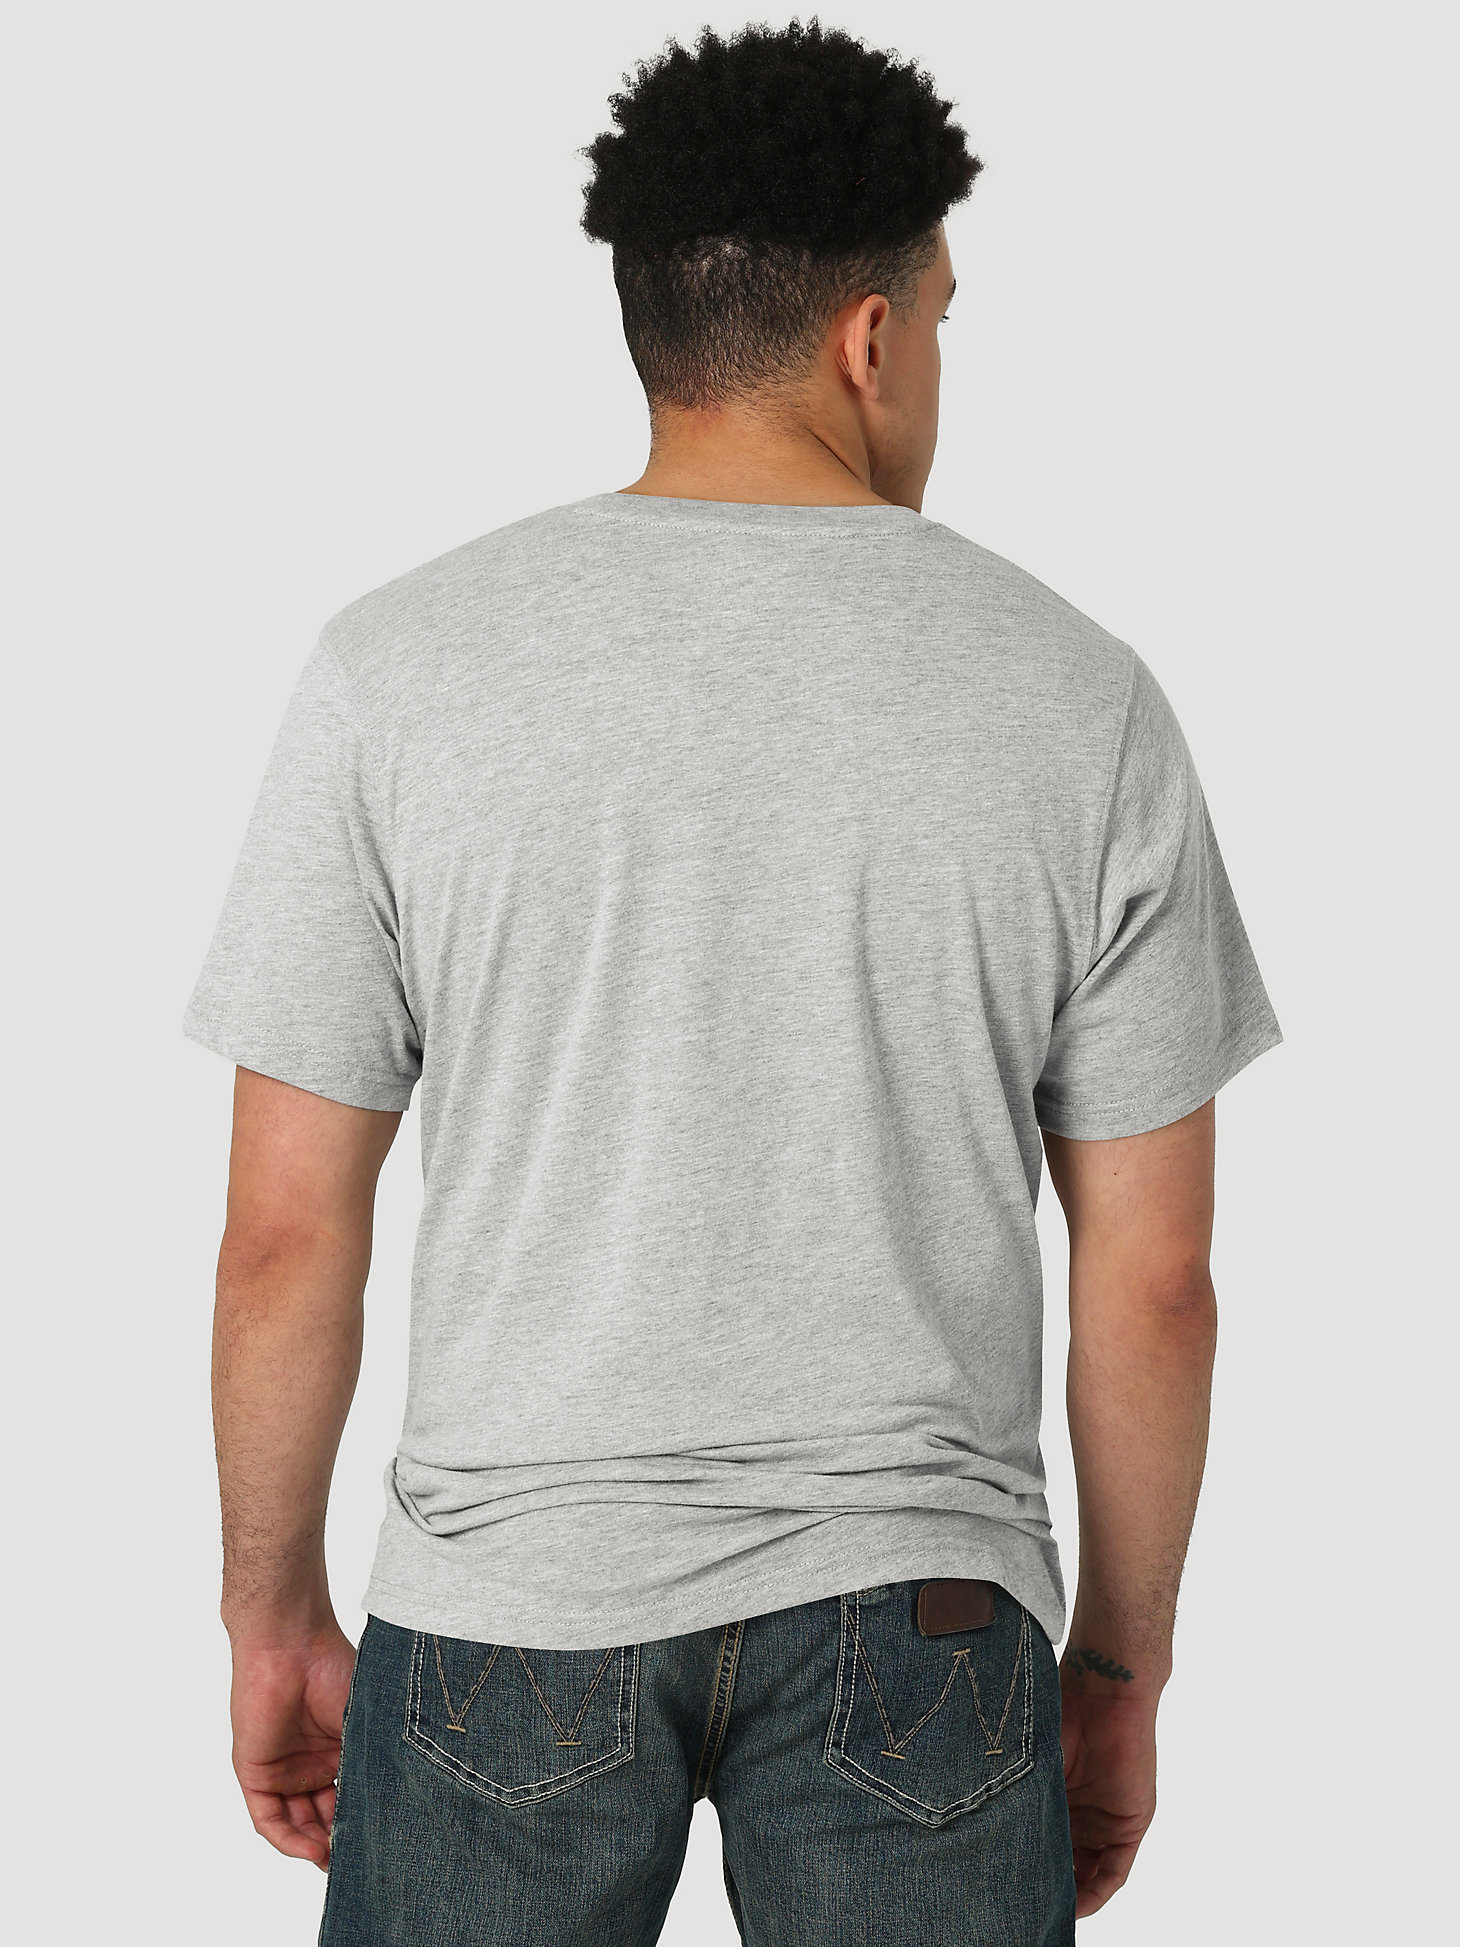 Wrangler Collegiate Sunset Printed Short Sleeve T-Shirt in University of Florida alternative view 2